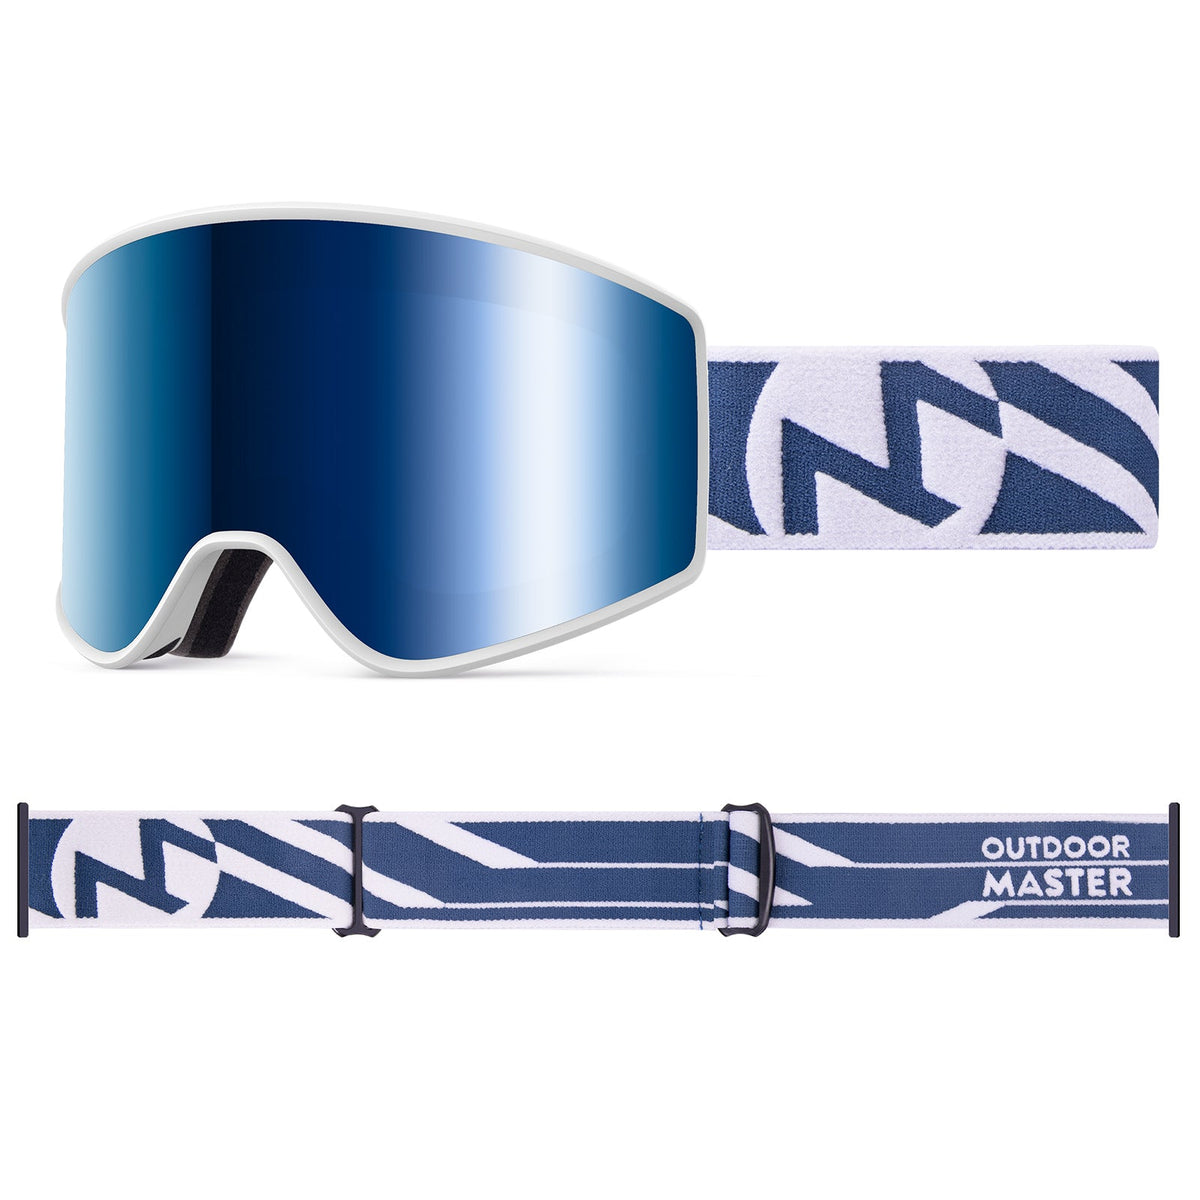 Masque de ski PULSE XL Cylindrique